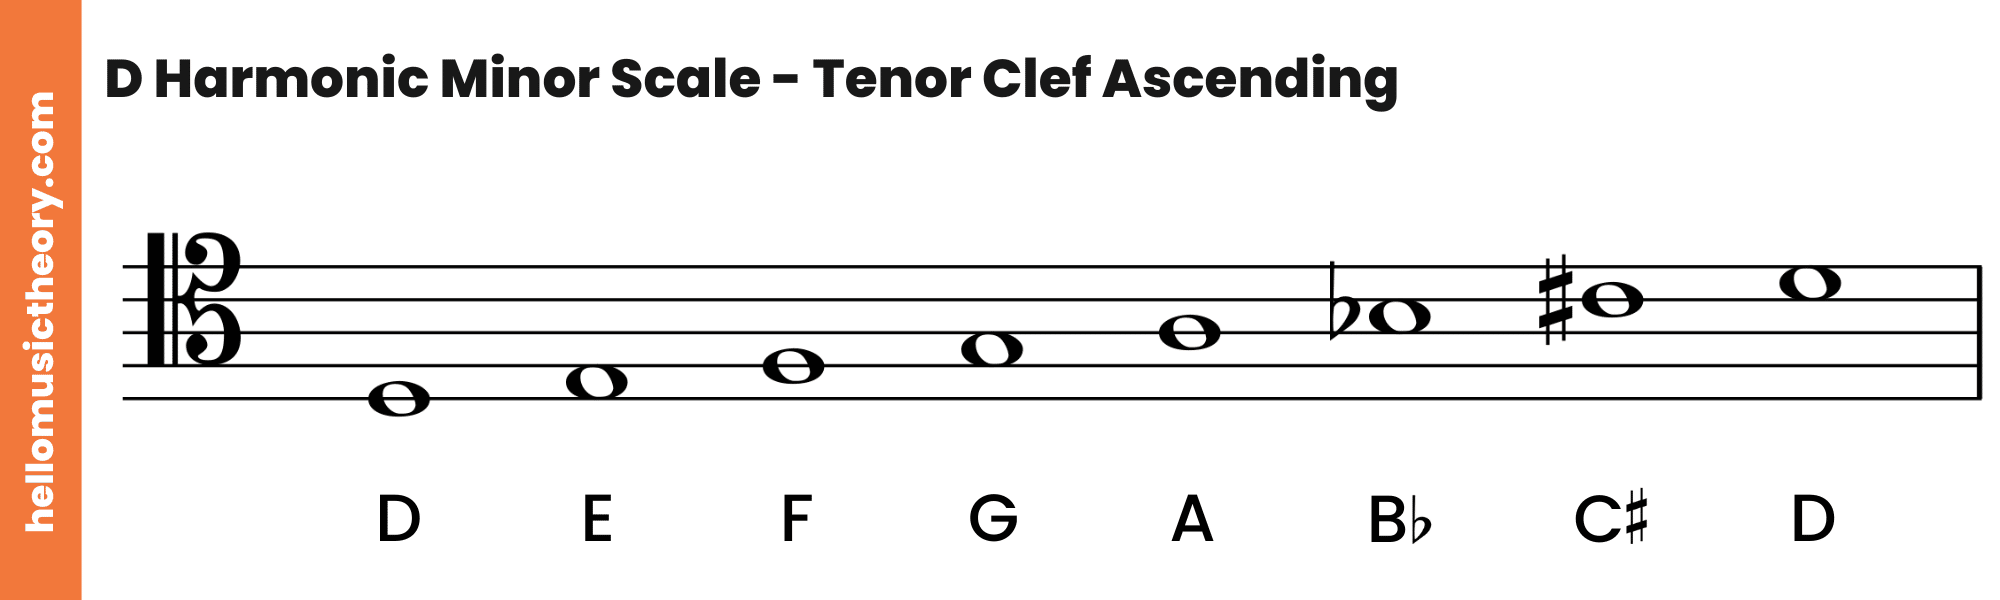 D Harmonic Minor Scale Tenor Clef Ascending